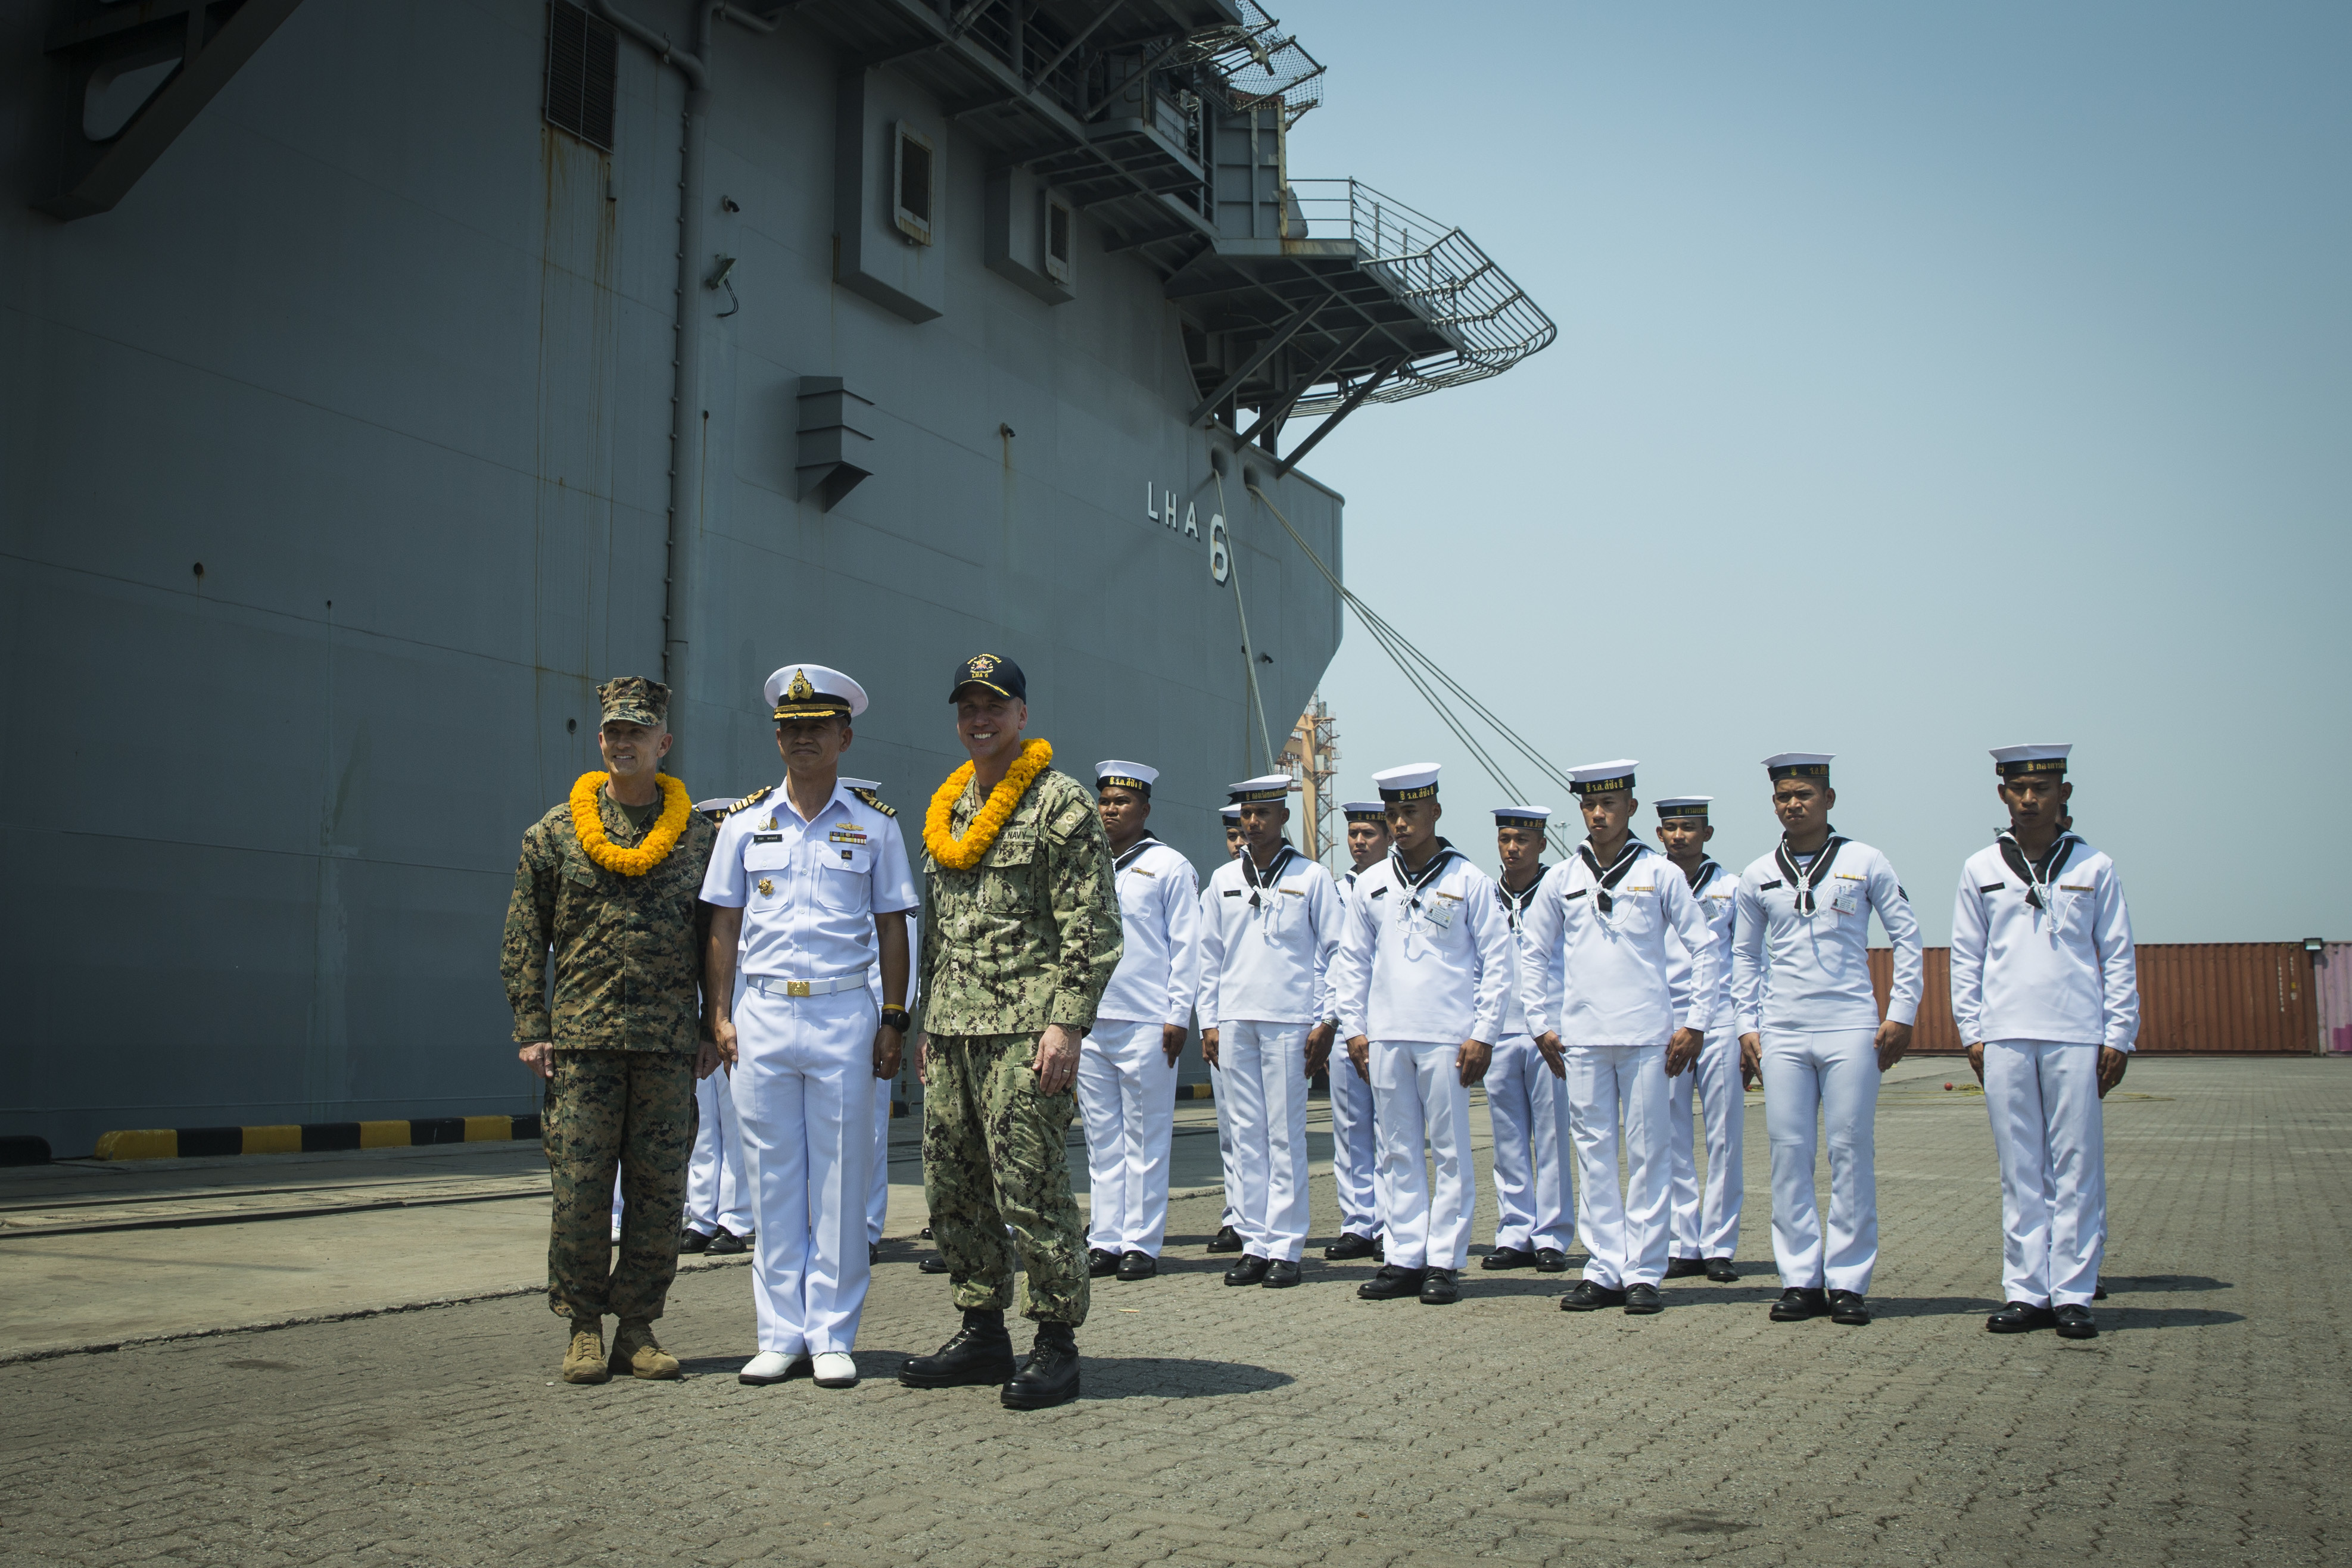 U.S. Navy's Third Fleet Rebalances to East Asia